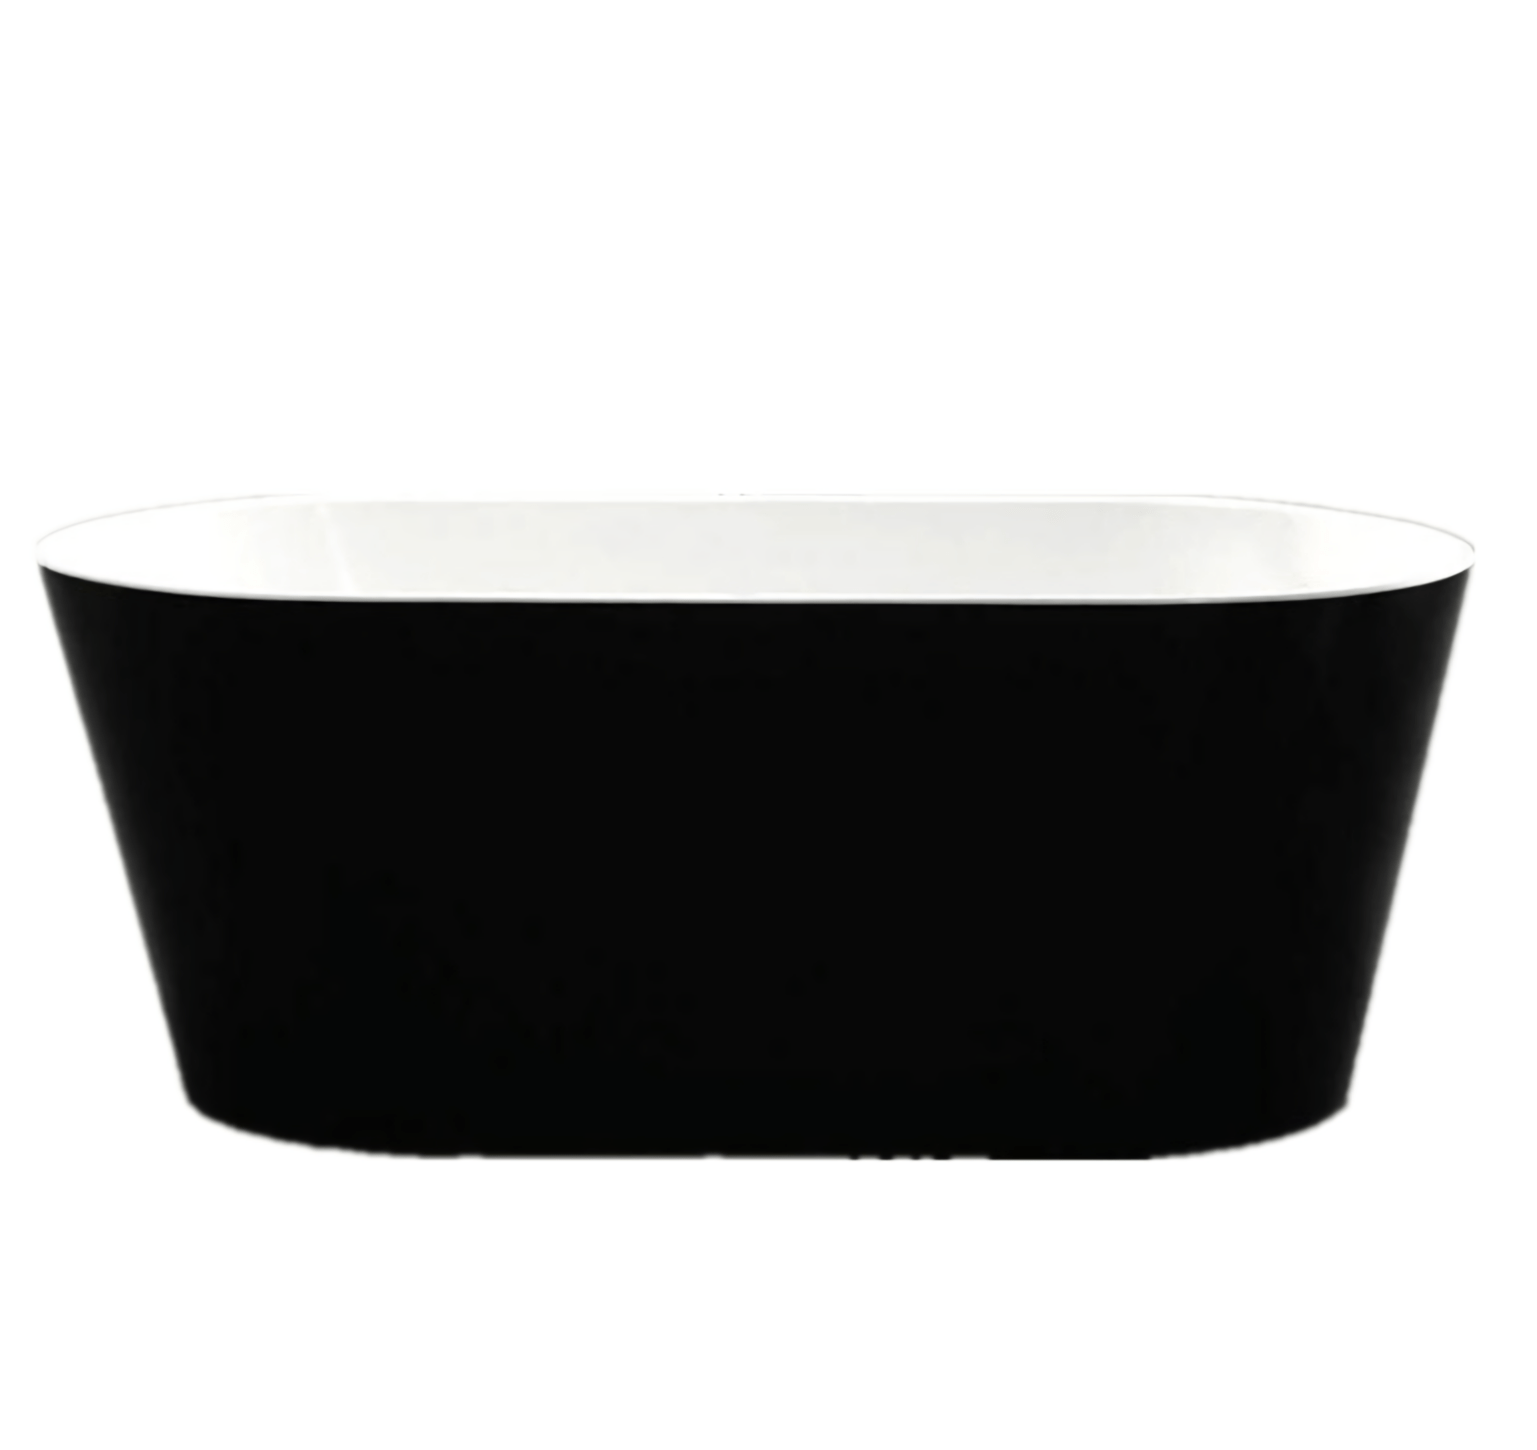 1500/1700mm OVIA Gloss Black and White Bathtub